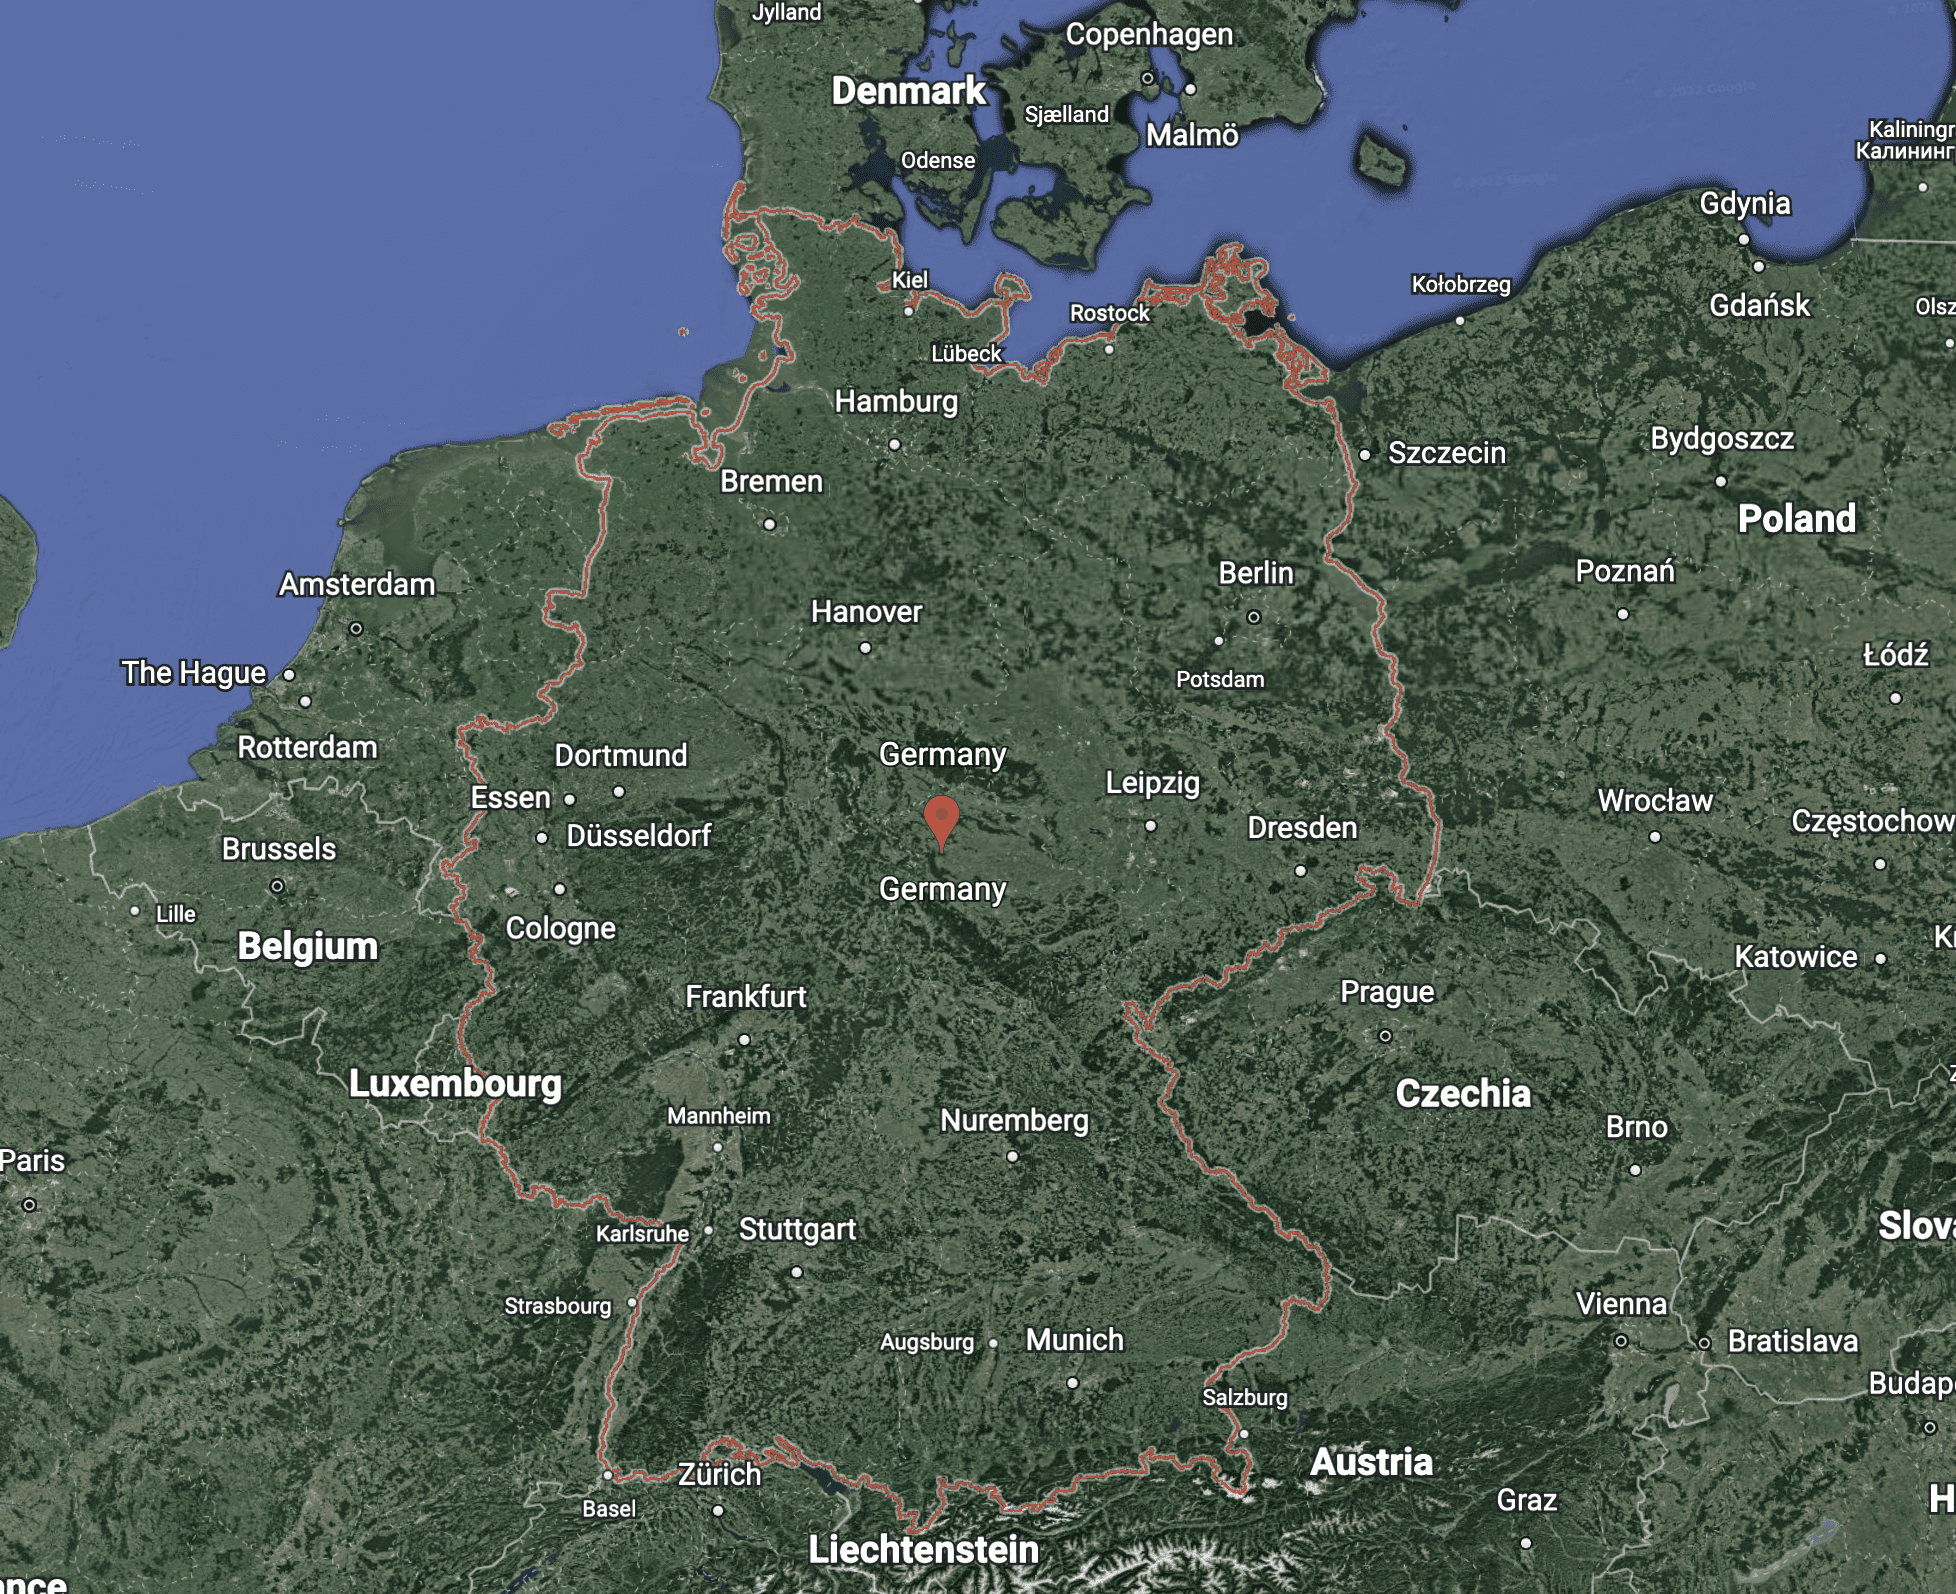 Google Earth Satellite Image of Germany